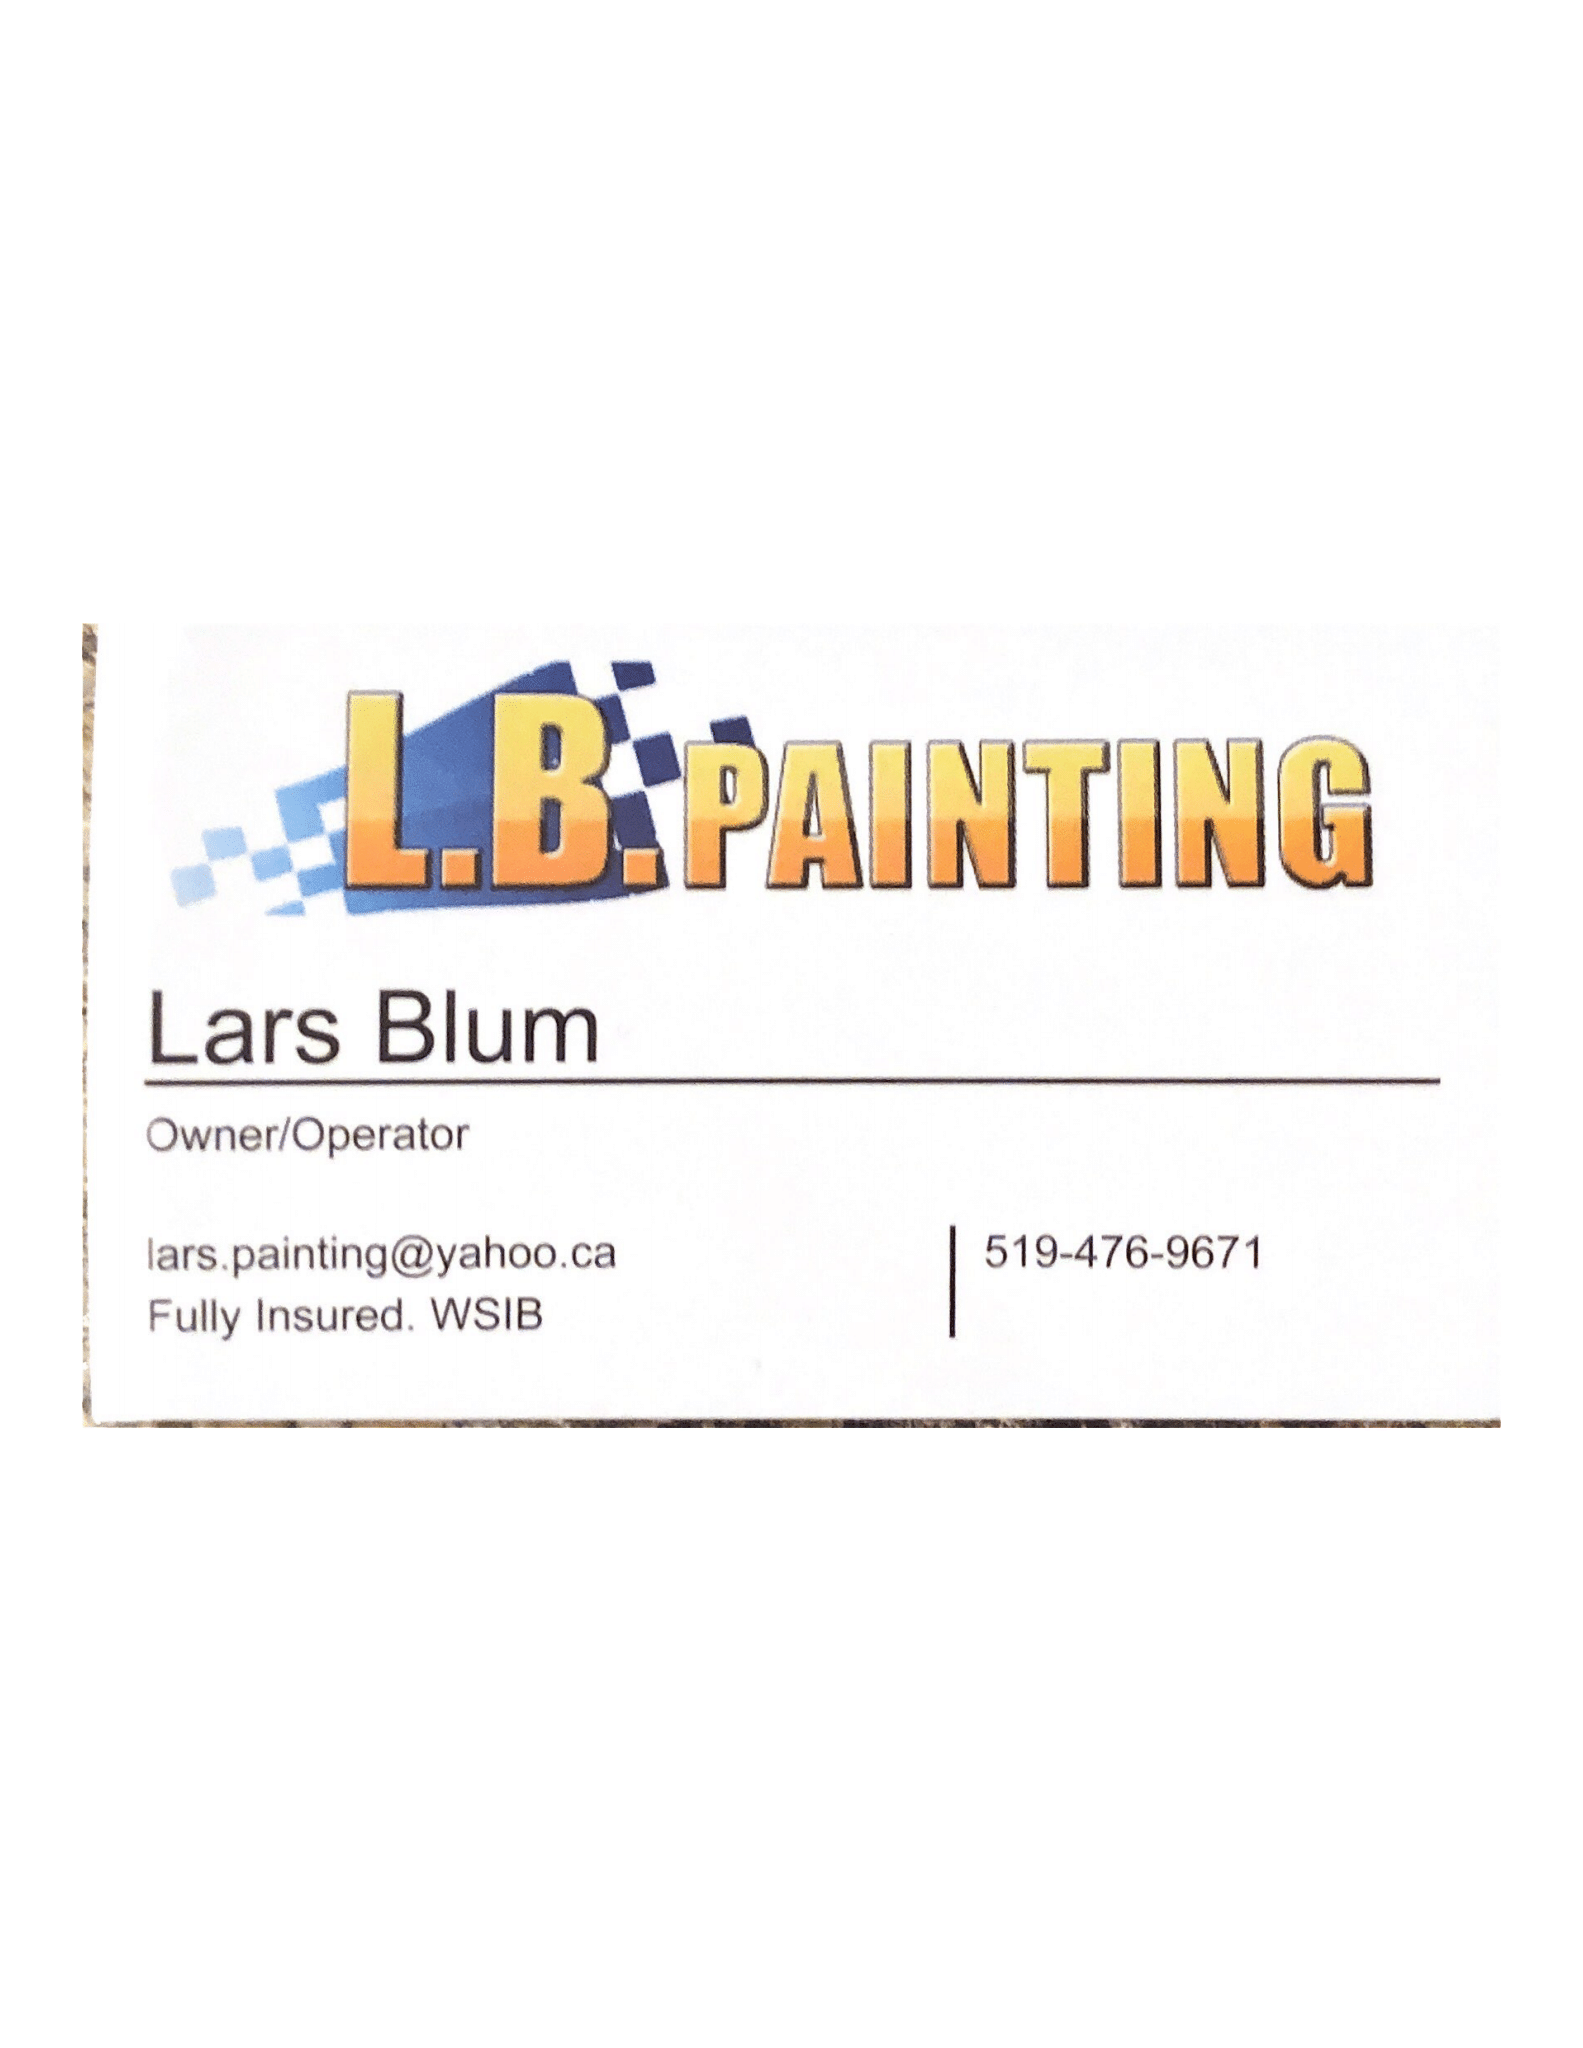 Lars Blum Painting